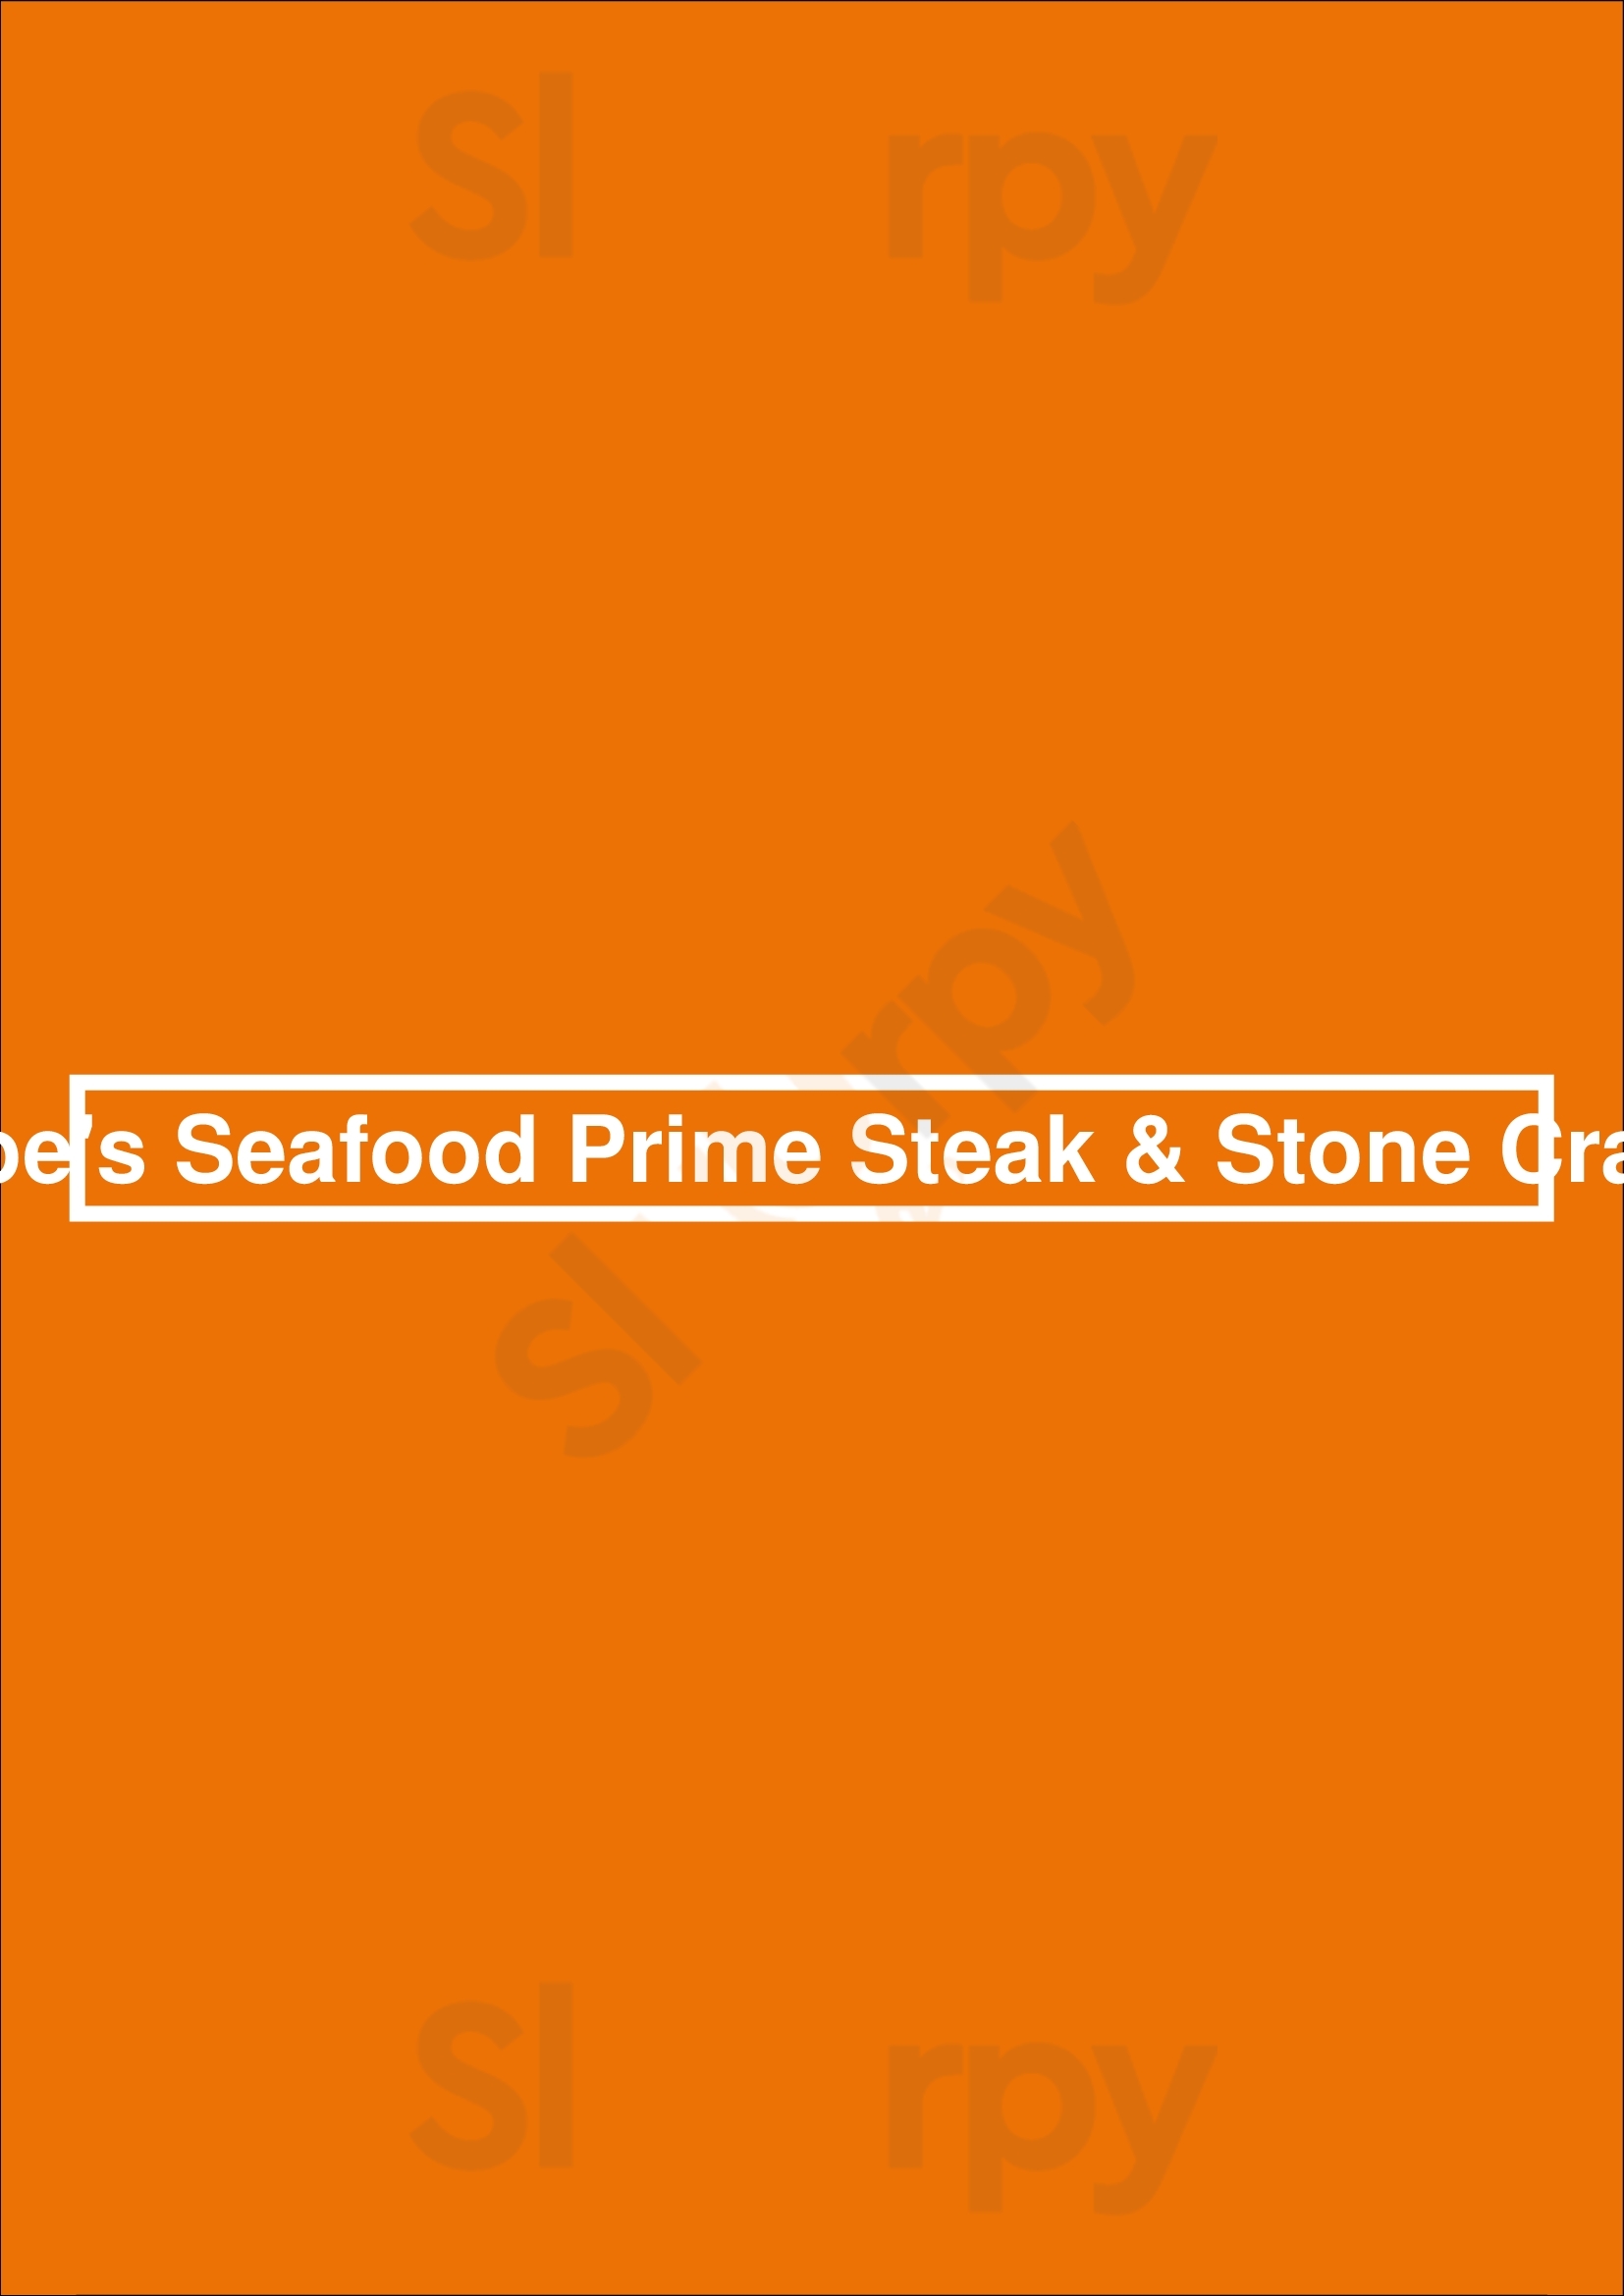 Joe's Seafood Prime Steak & Stone Crab Washington DC Menu - 1